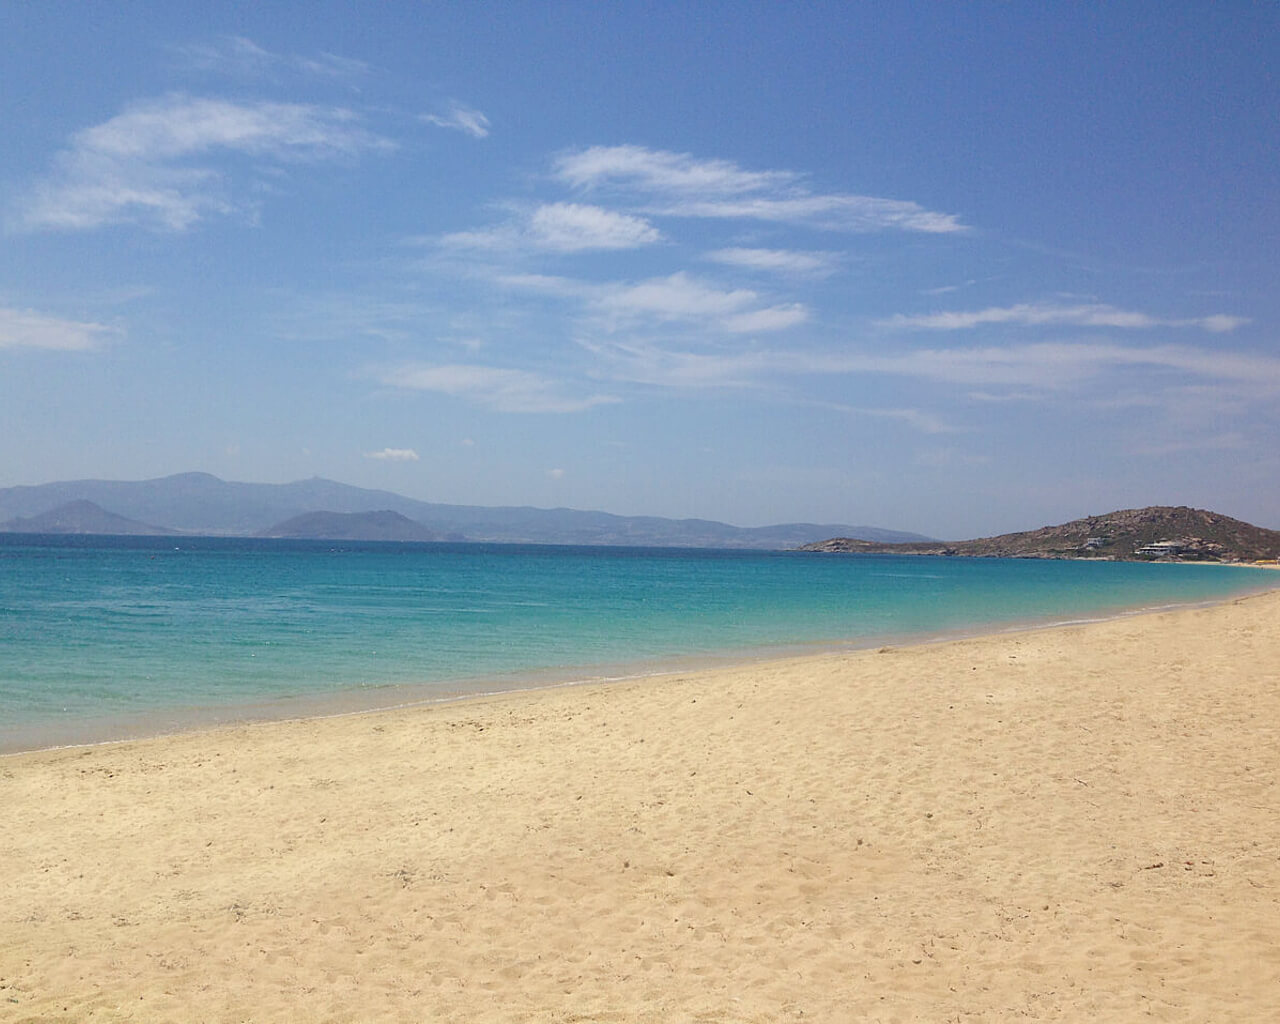 Vacances aux Cyclades, Naxos, Grèce